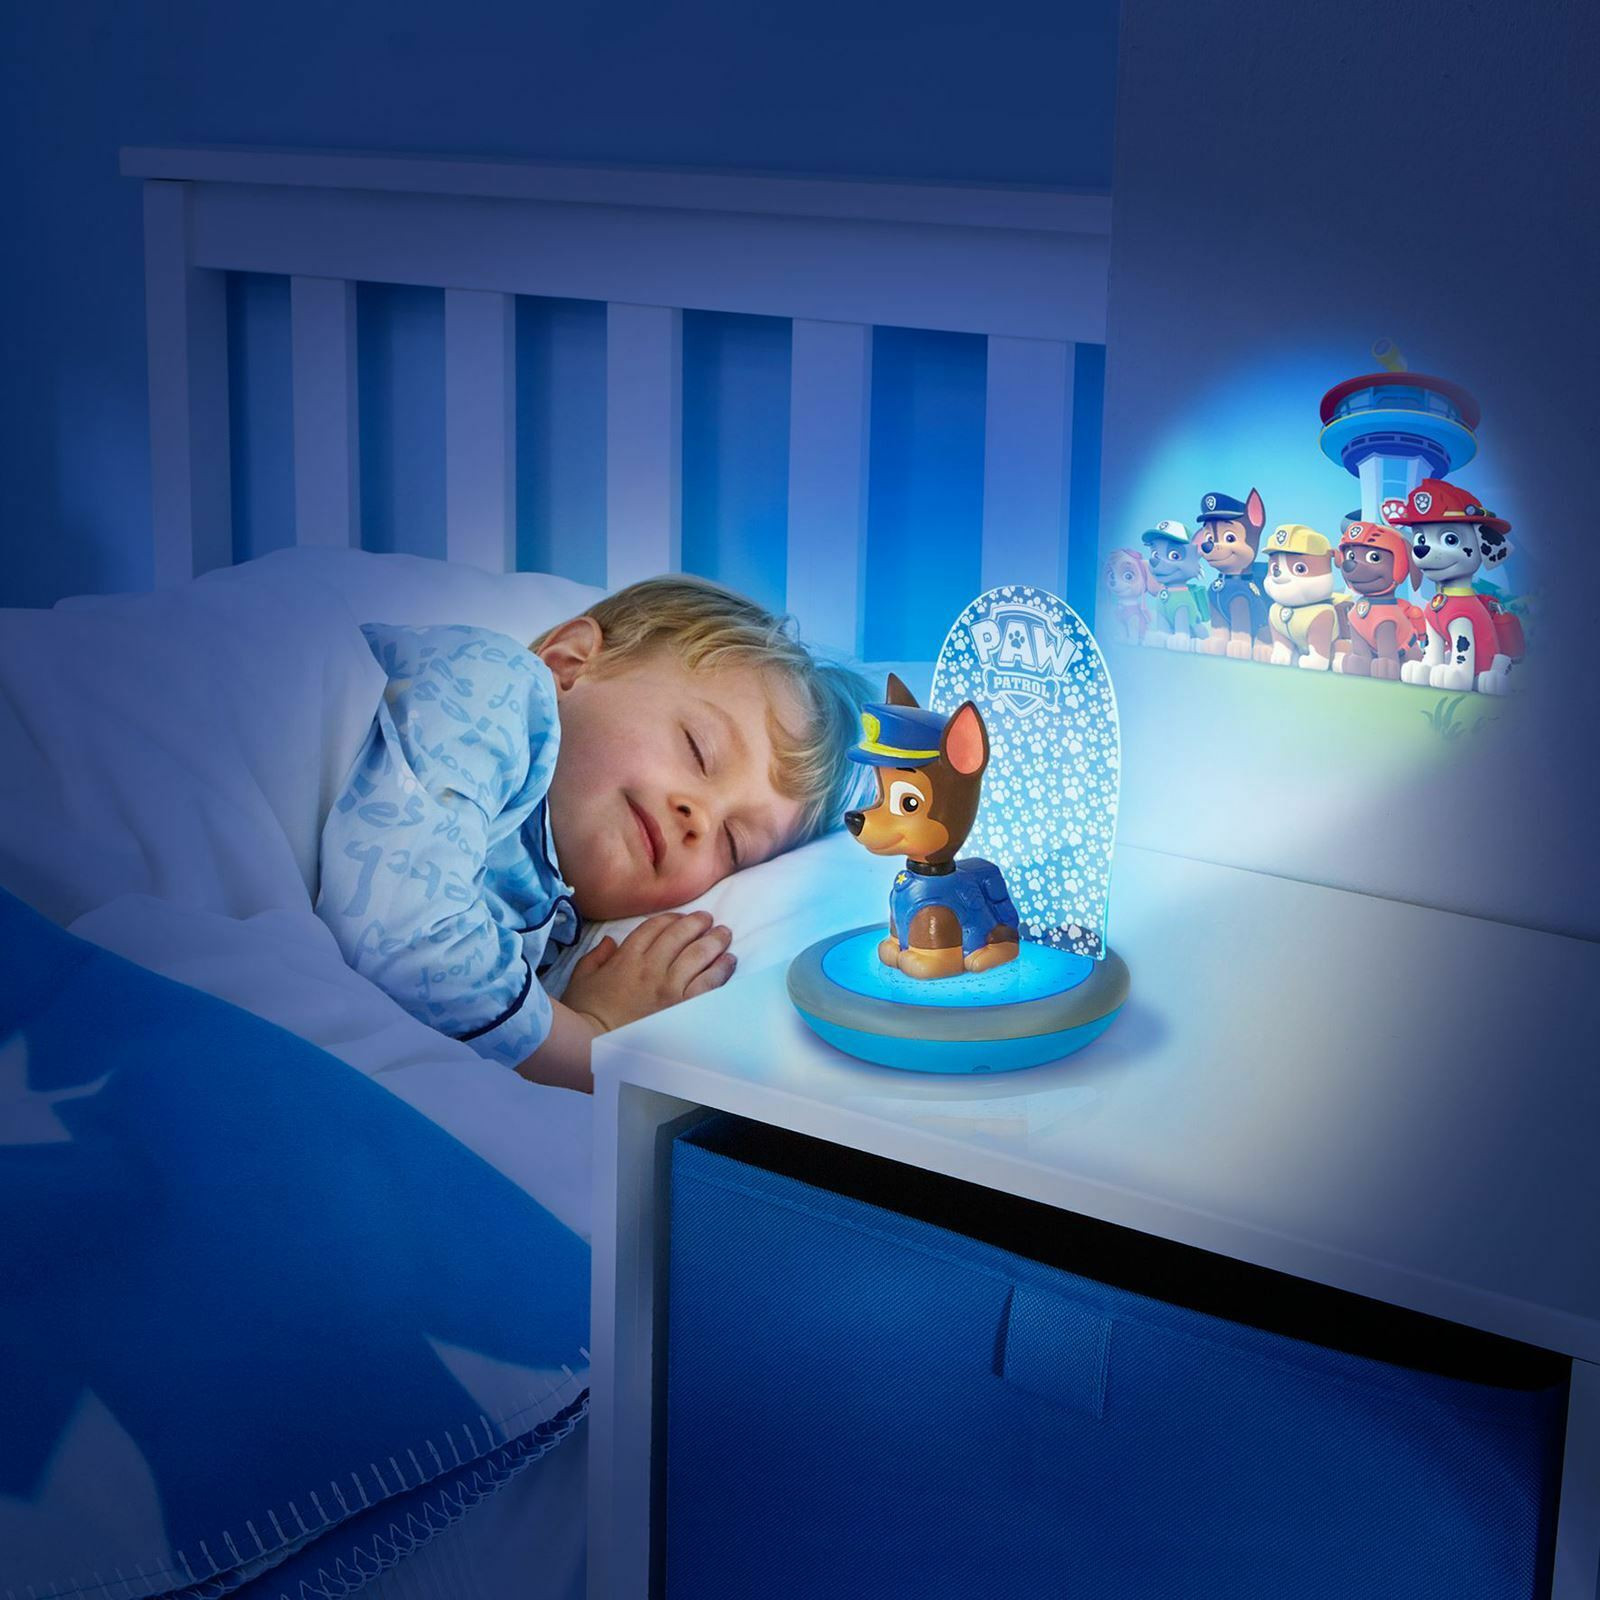 Nightlight For Kids Room
 PAW PATROL CHASE 3 IN 1 MAGIC GO GLOW NIGHT LIGHT KIDS